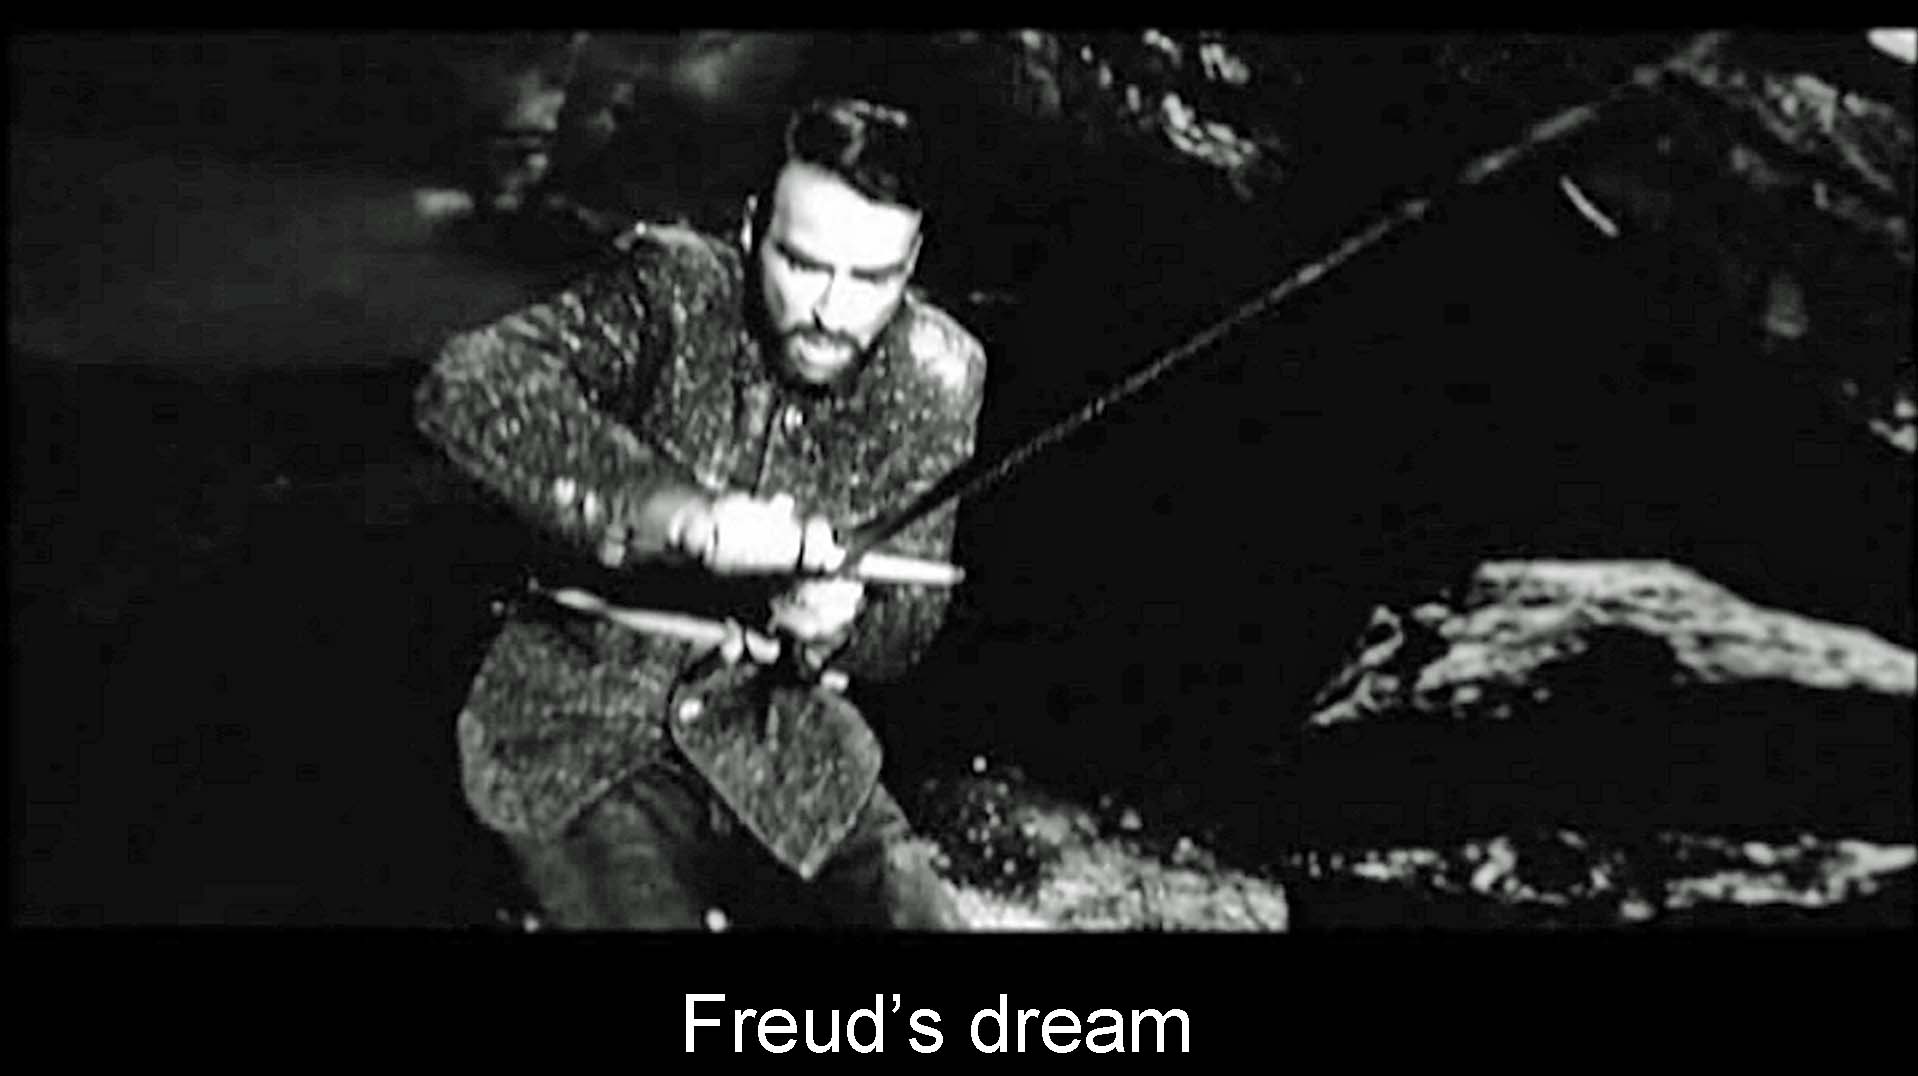 Freud's dream